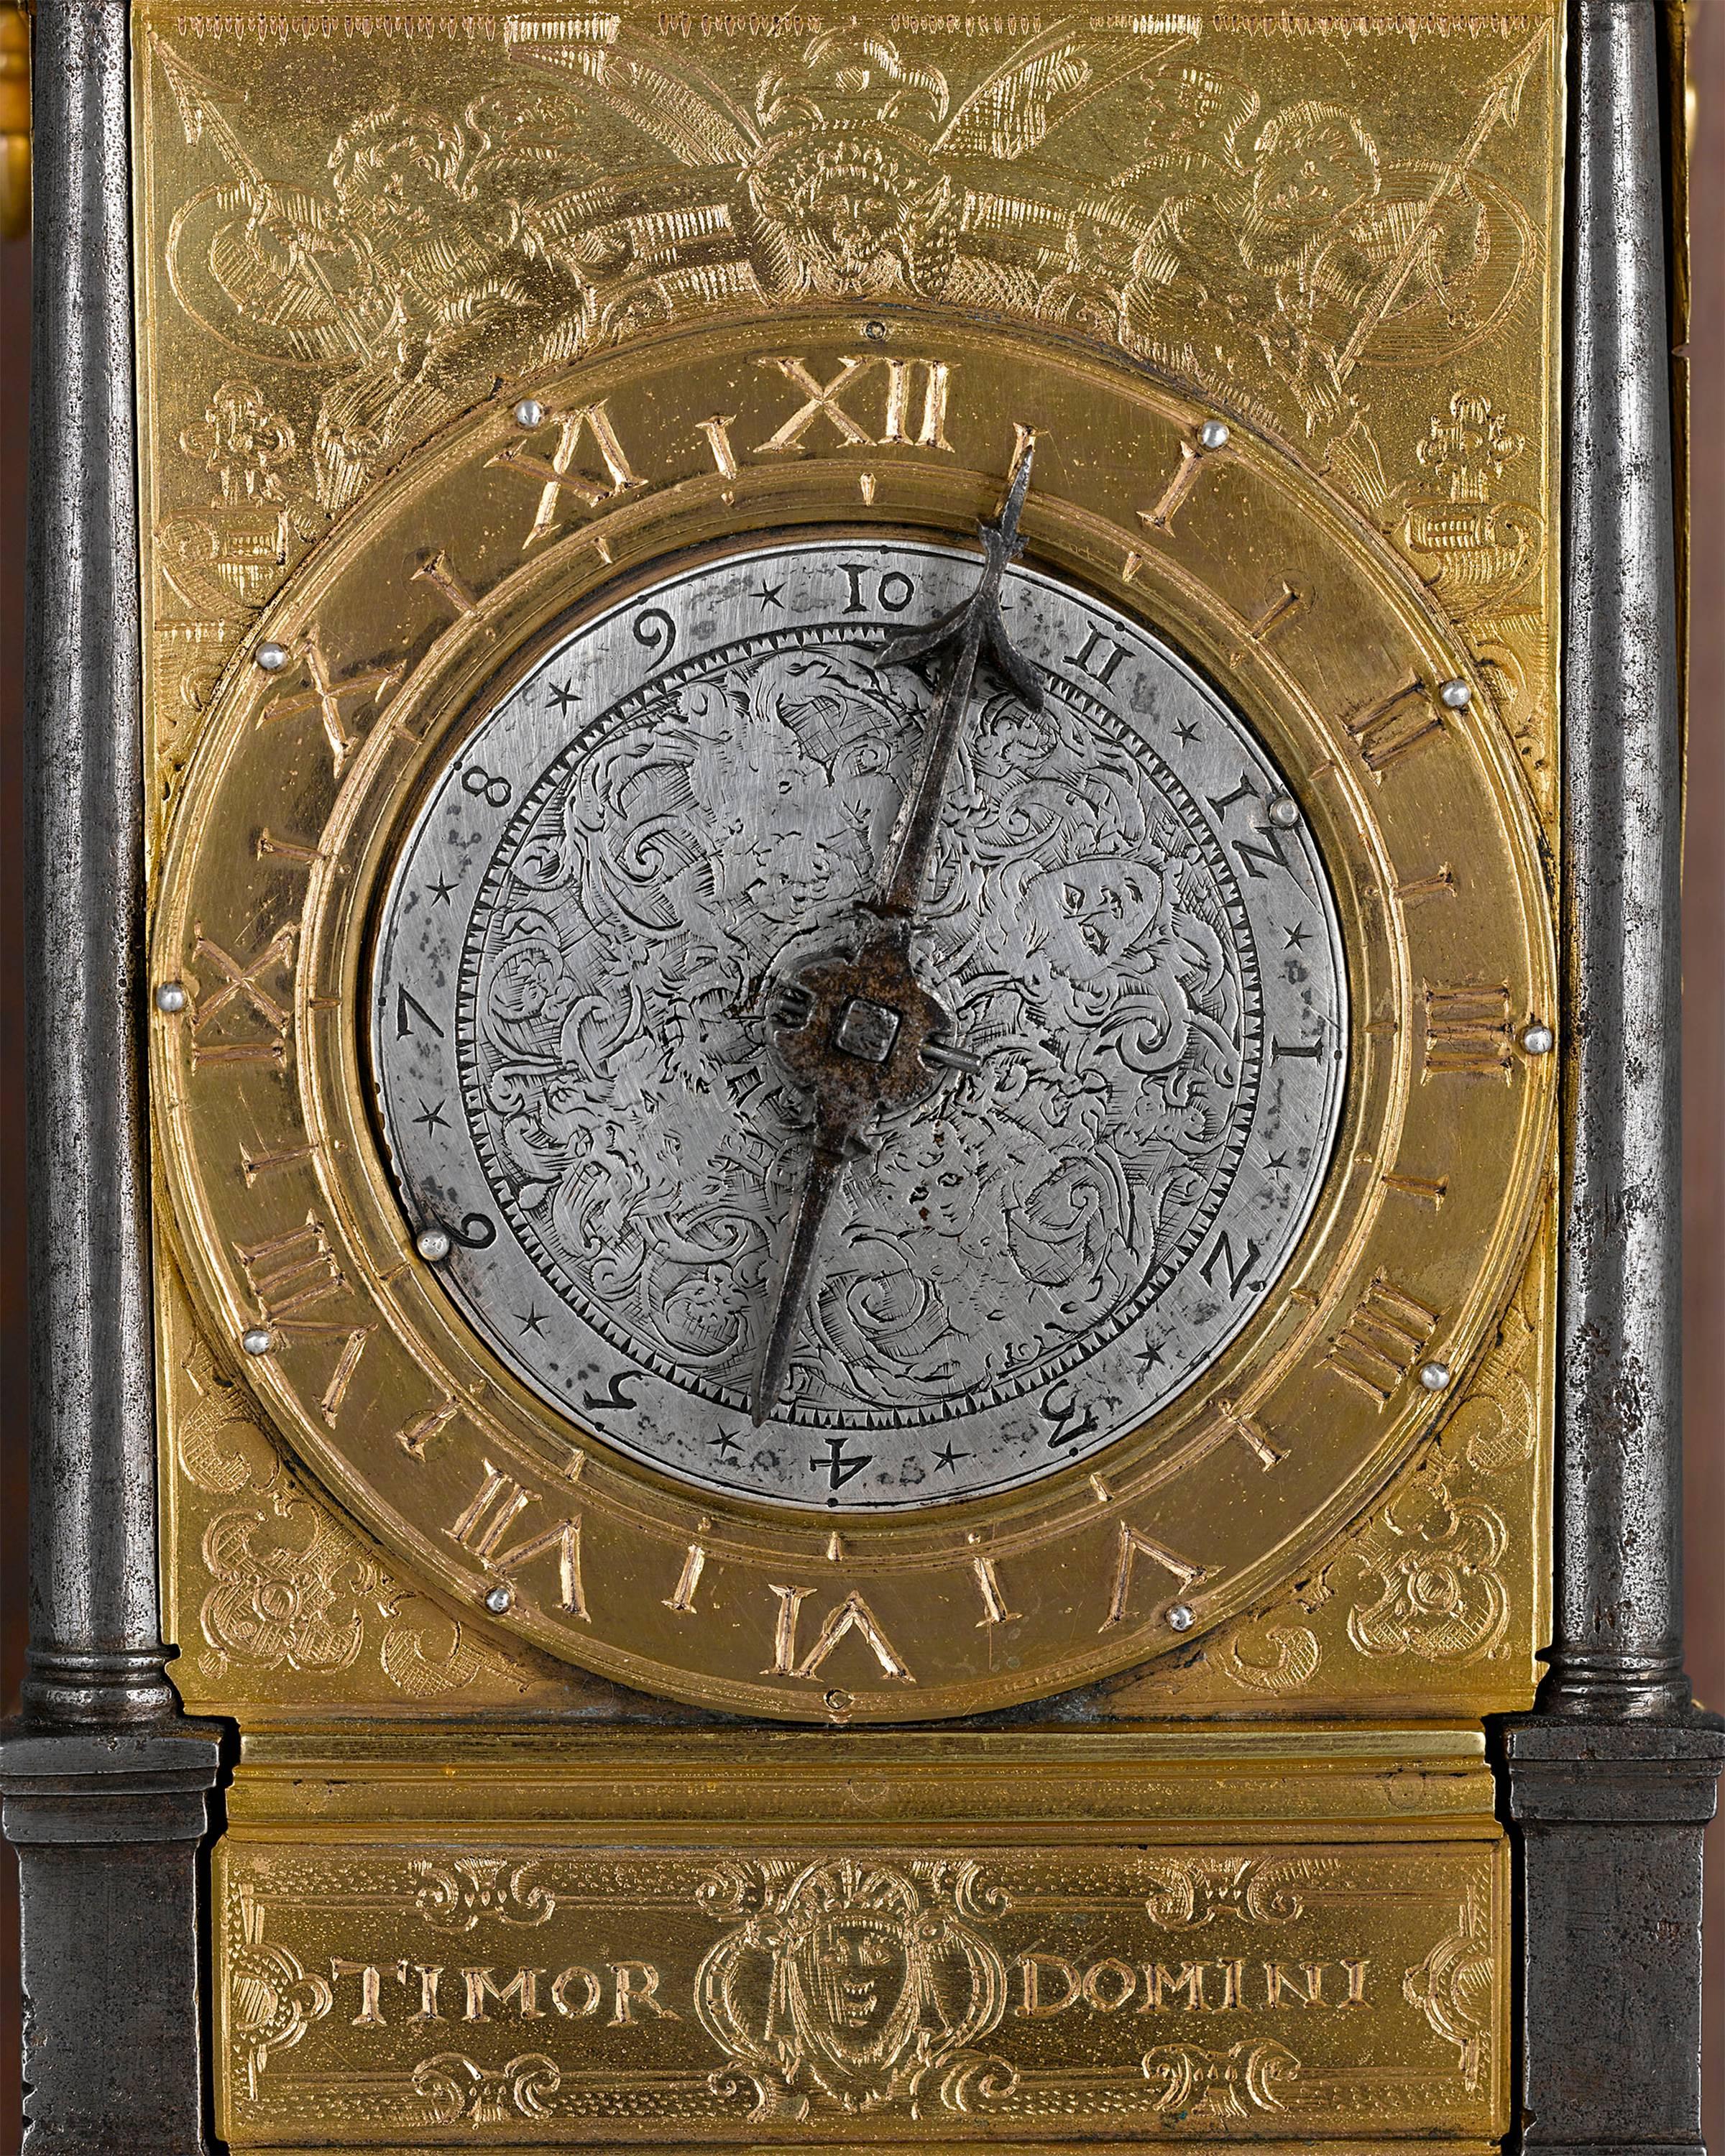 16th century clocks